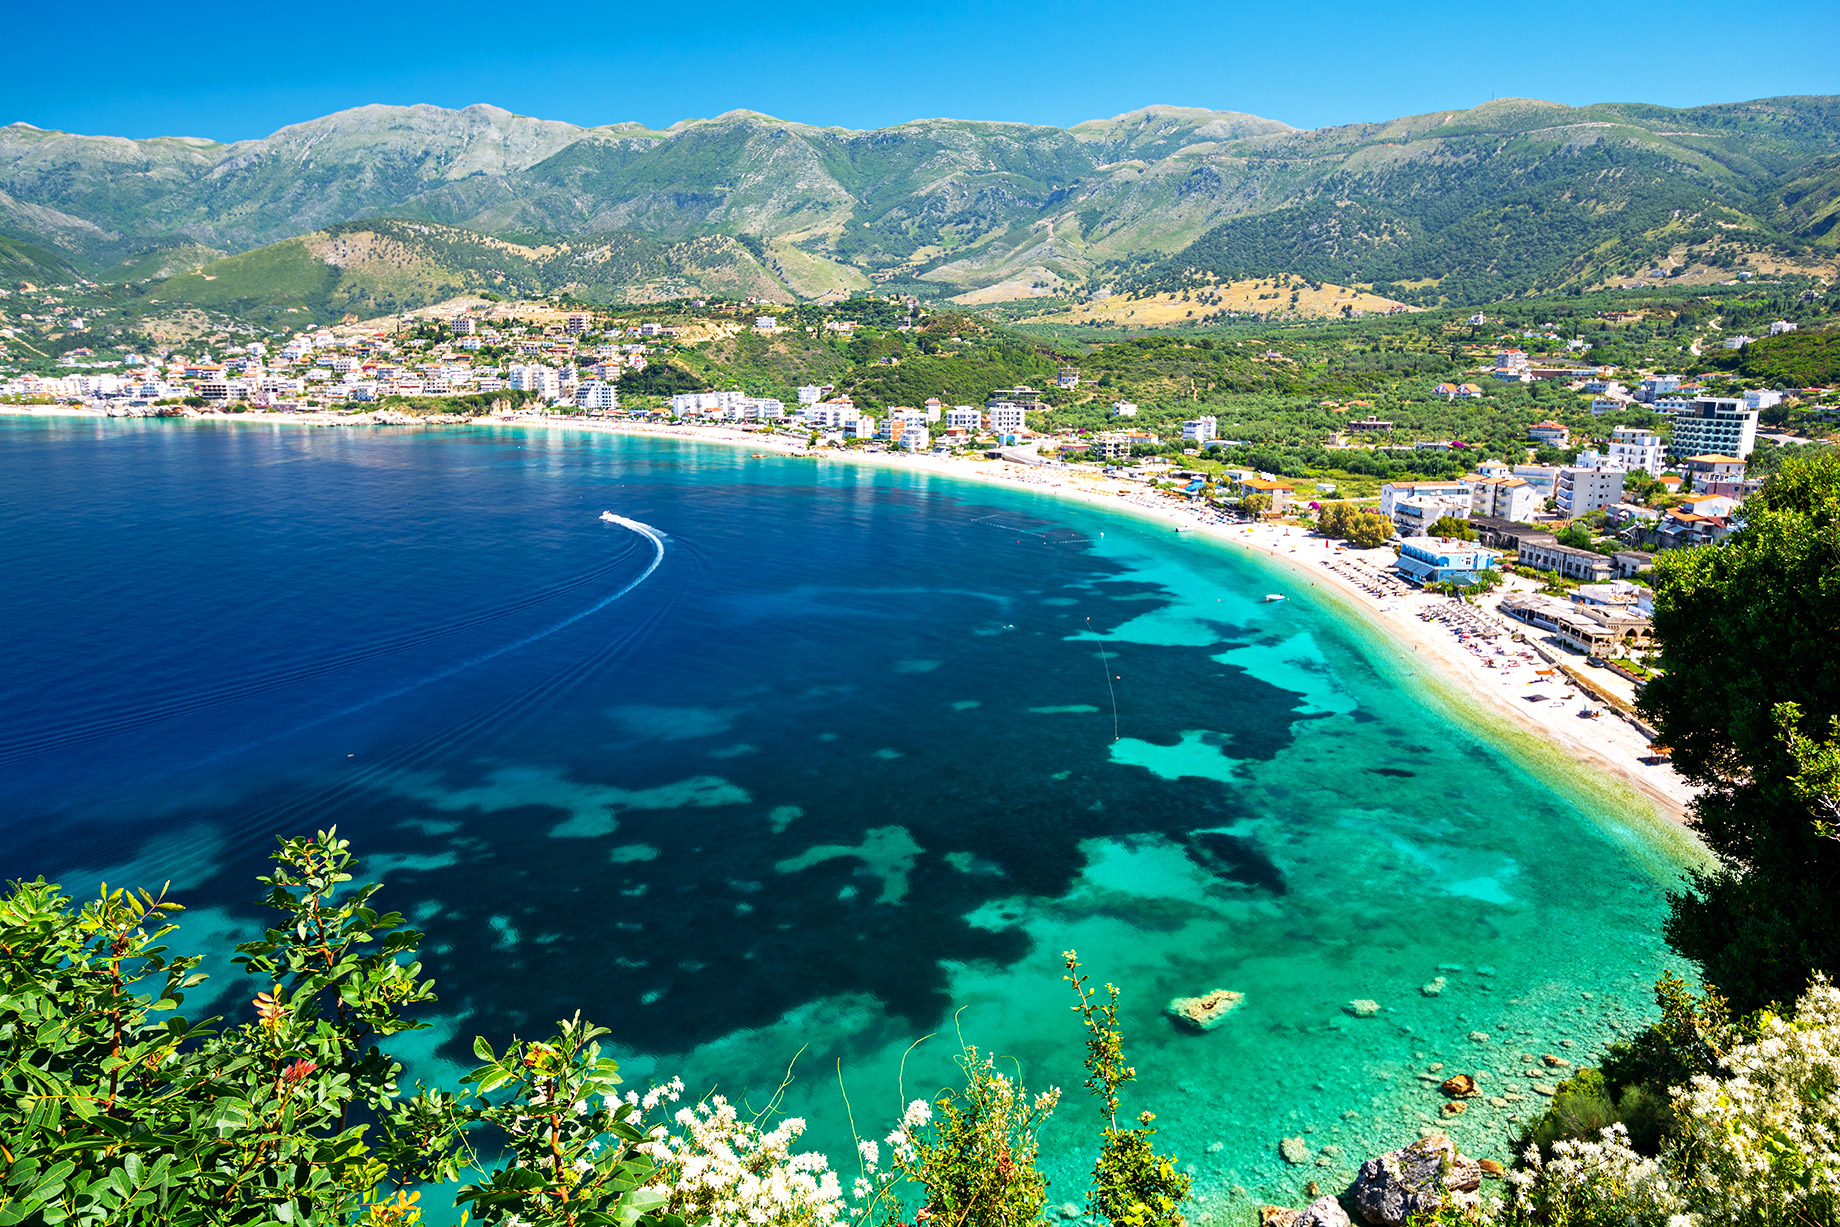 Albanian Rivieria - Adriatic Sea - Himarë, Albania